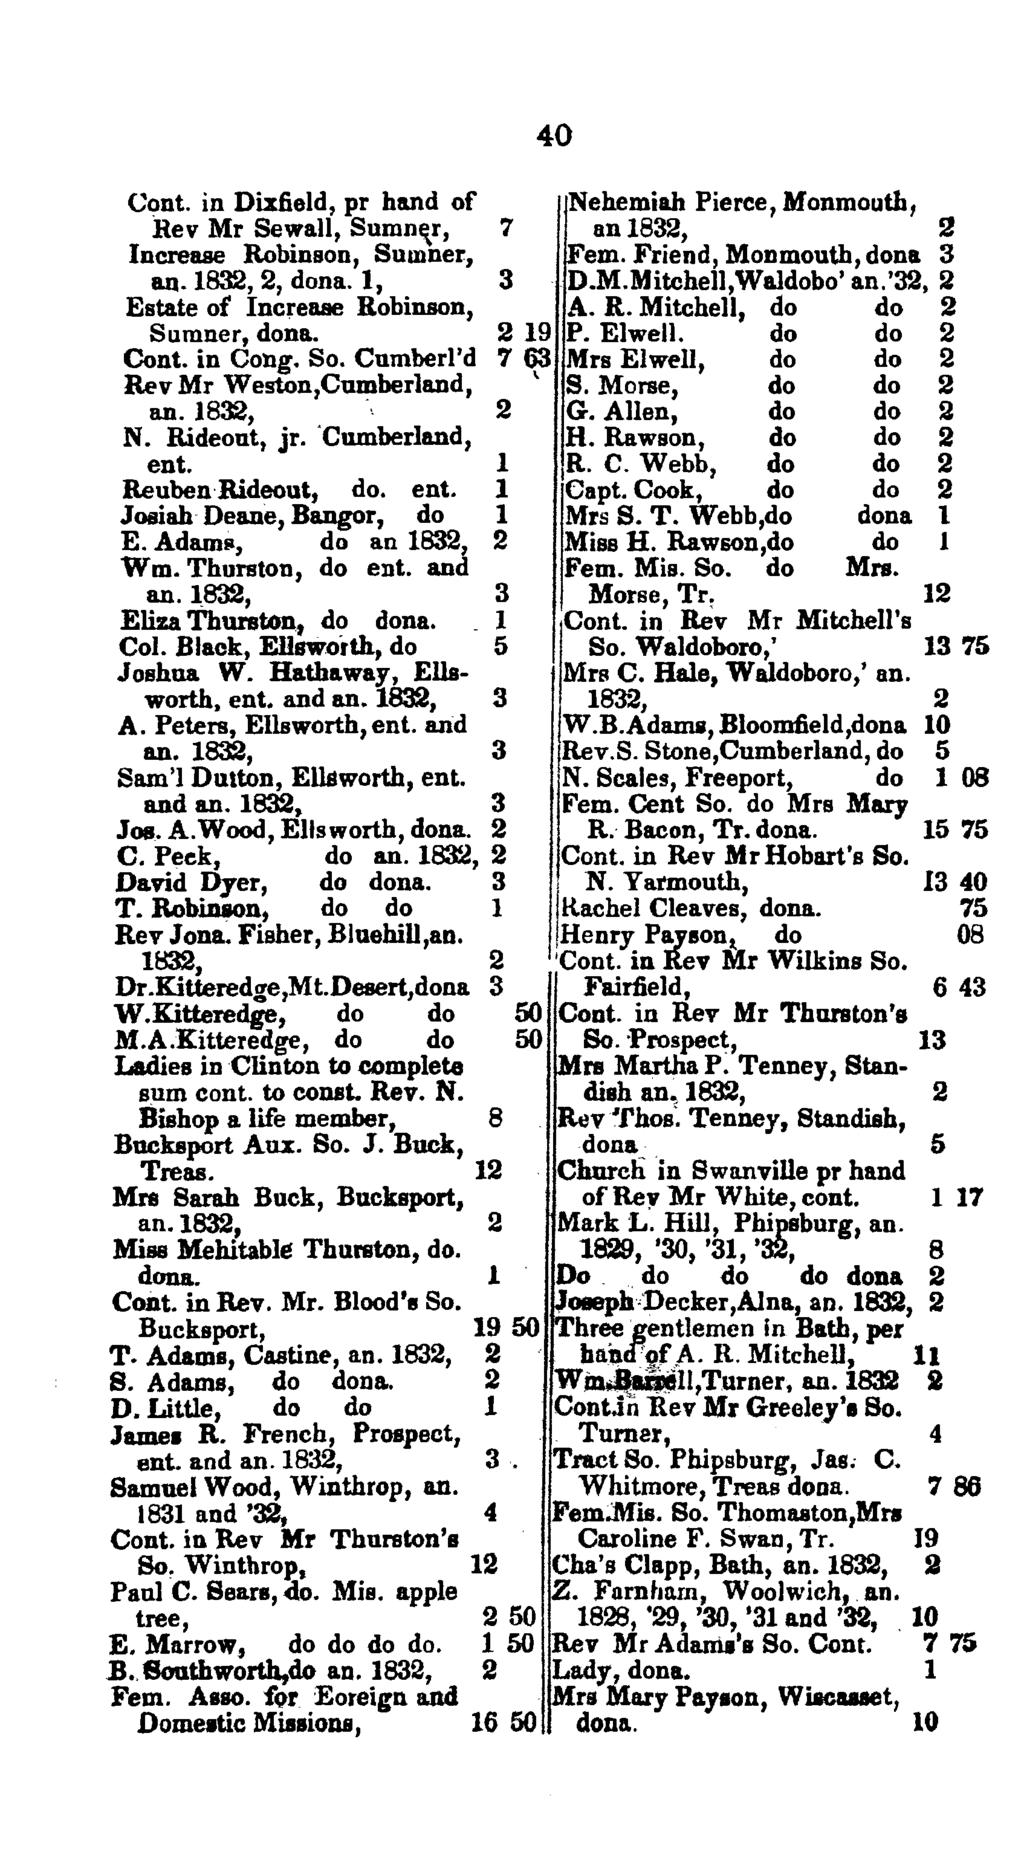 2 40 Cont. in Dixfield, pr hand of Nehemiah Pierce, Monmouth, Rev Mr Sewall, Sumnftr, 7 an 1832, 2 Increase Robinson, Sumner, em. Friend, Monmouth, dona 3 aq.l832, 2, dona. 1, 3 D.M.Mitchell,Waldobo' an.